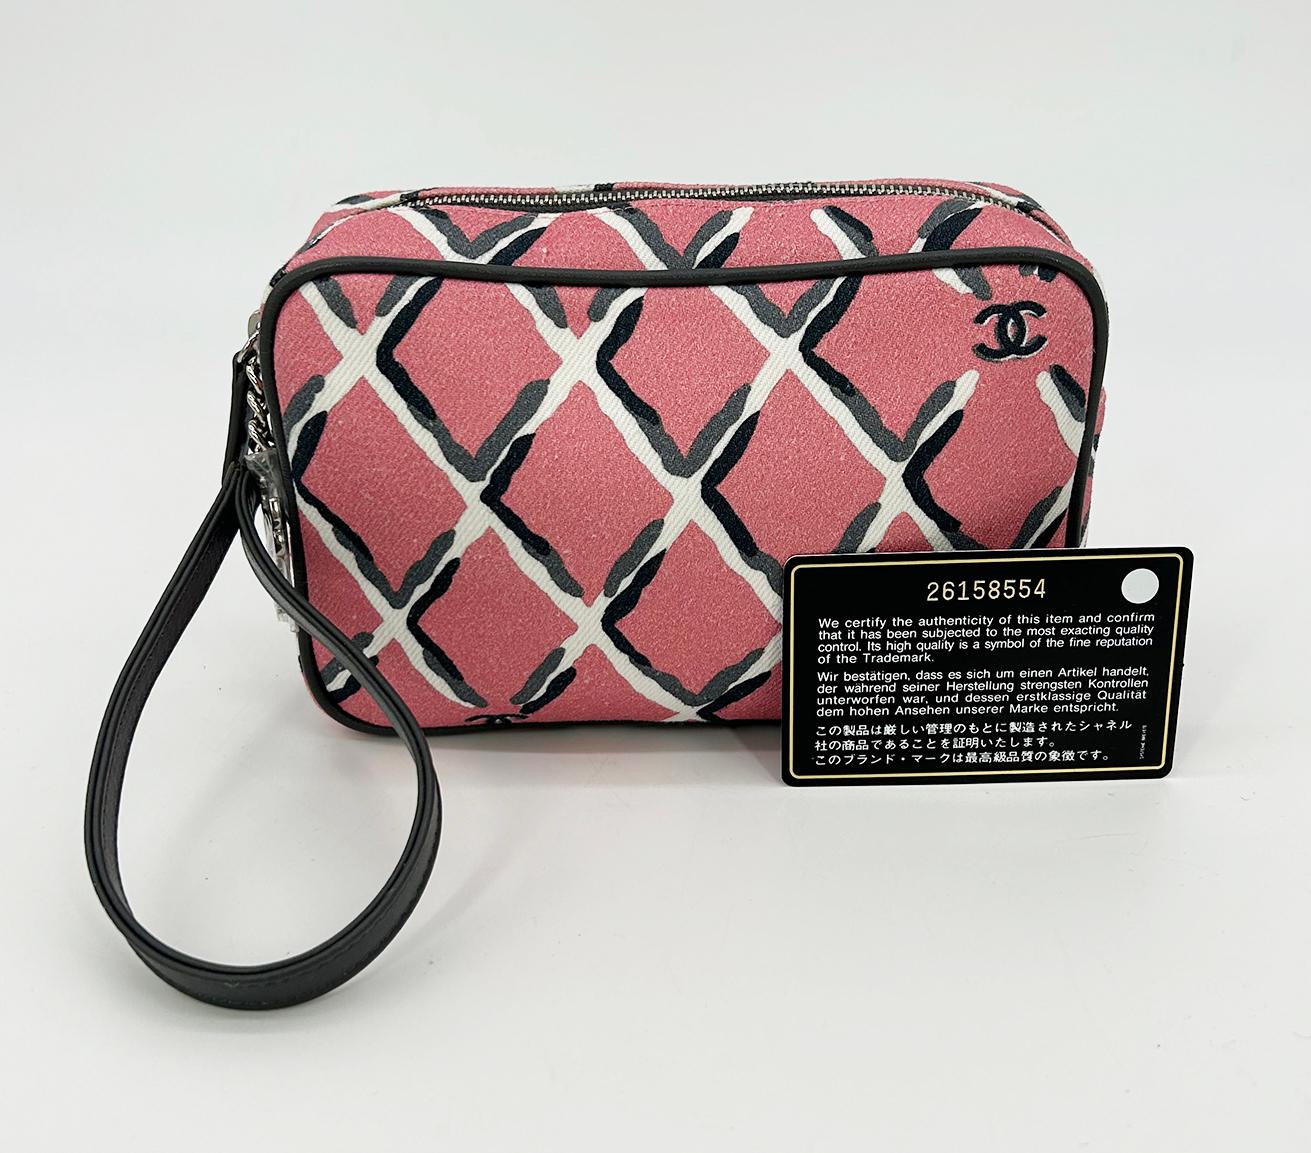 Chanel Coco rose pochette de plage en vente 7